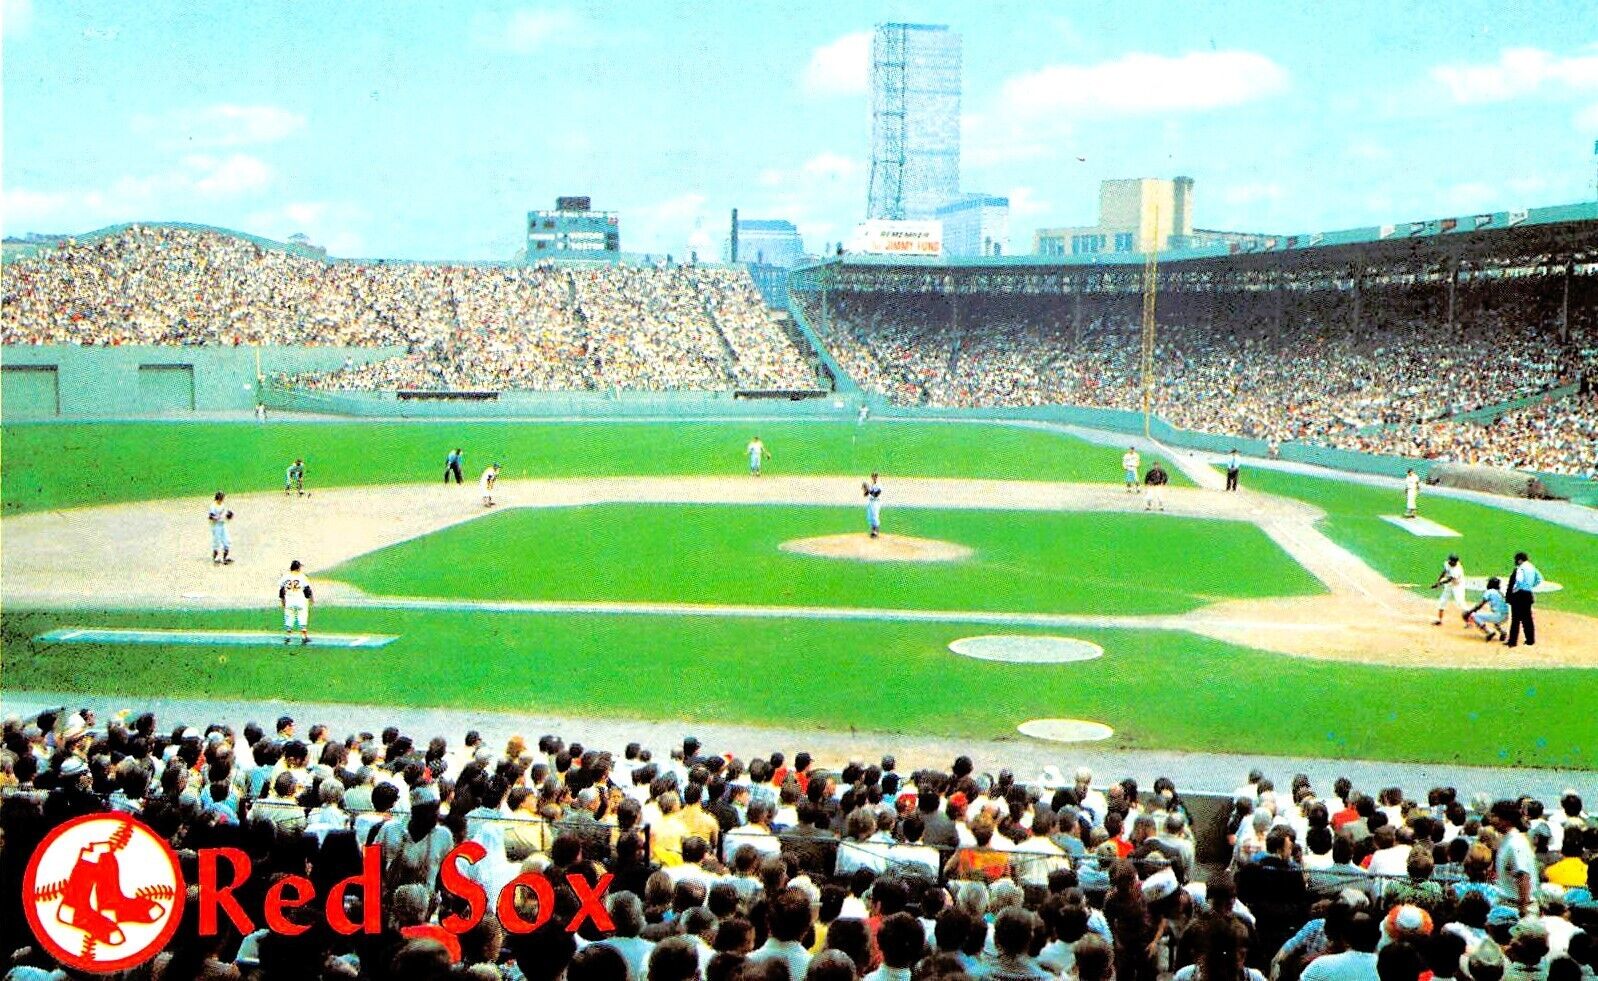 Boston Red Sox Fenway Park Baseball Stadium Fridge or Tool Box Magnet 2x3